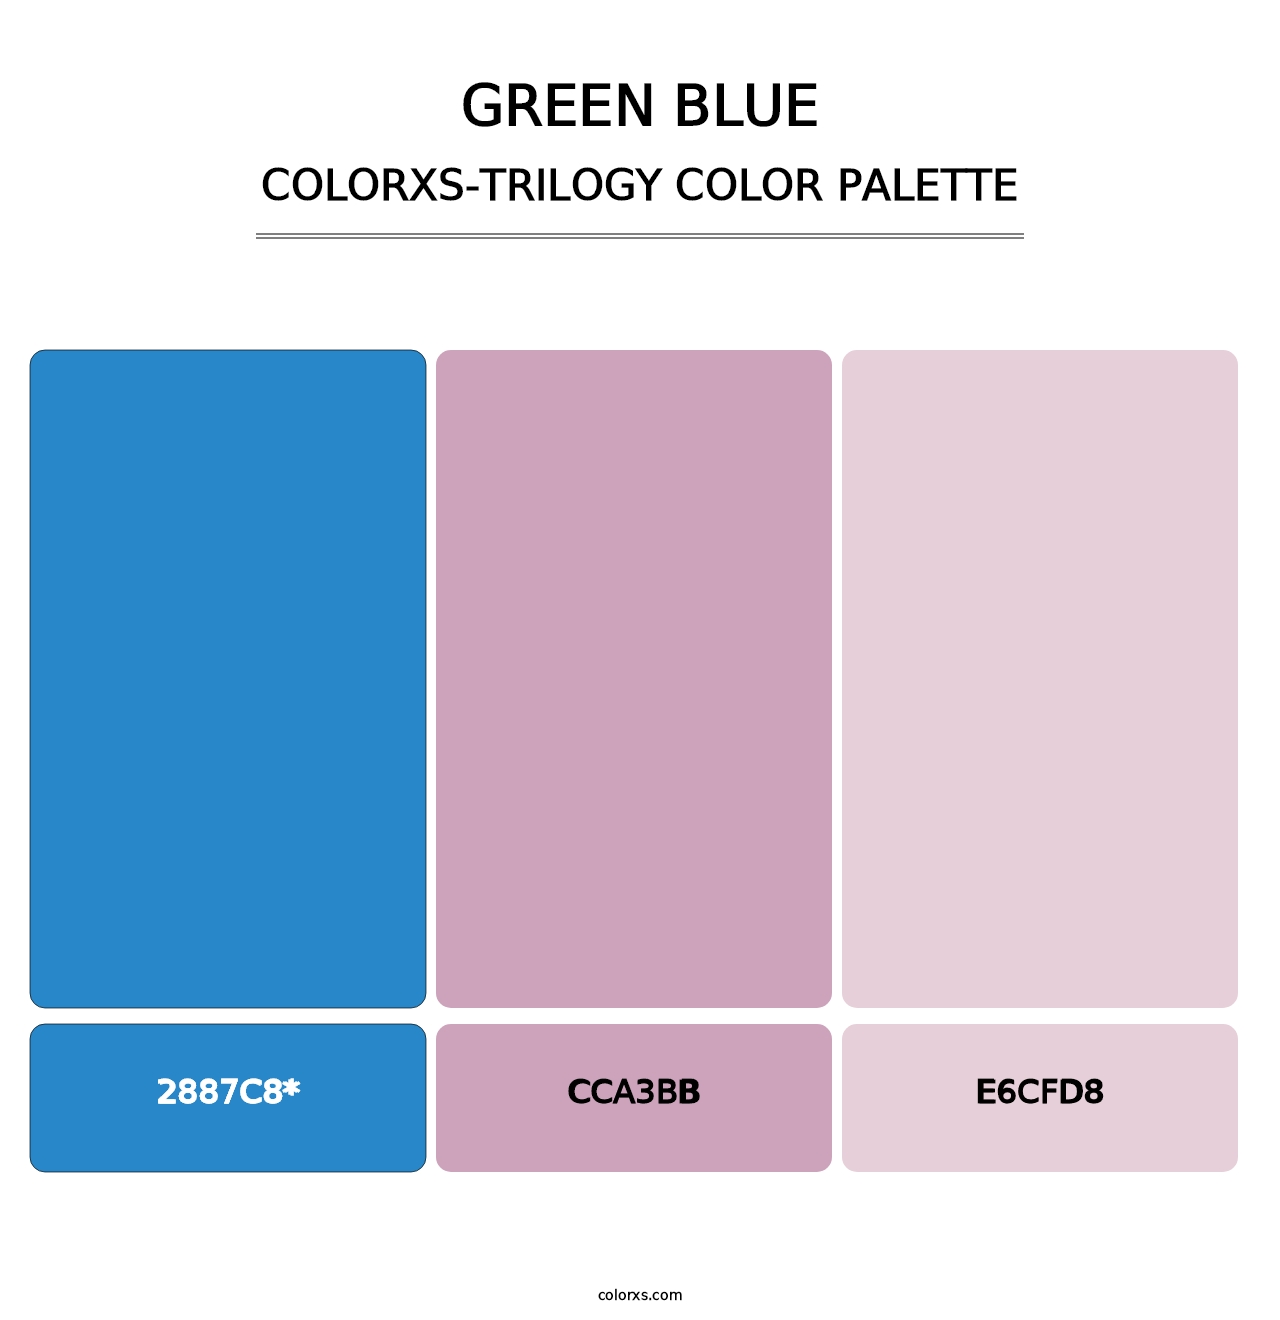 Green Blue - Colorxs Trilogy Palette